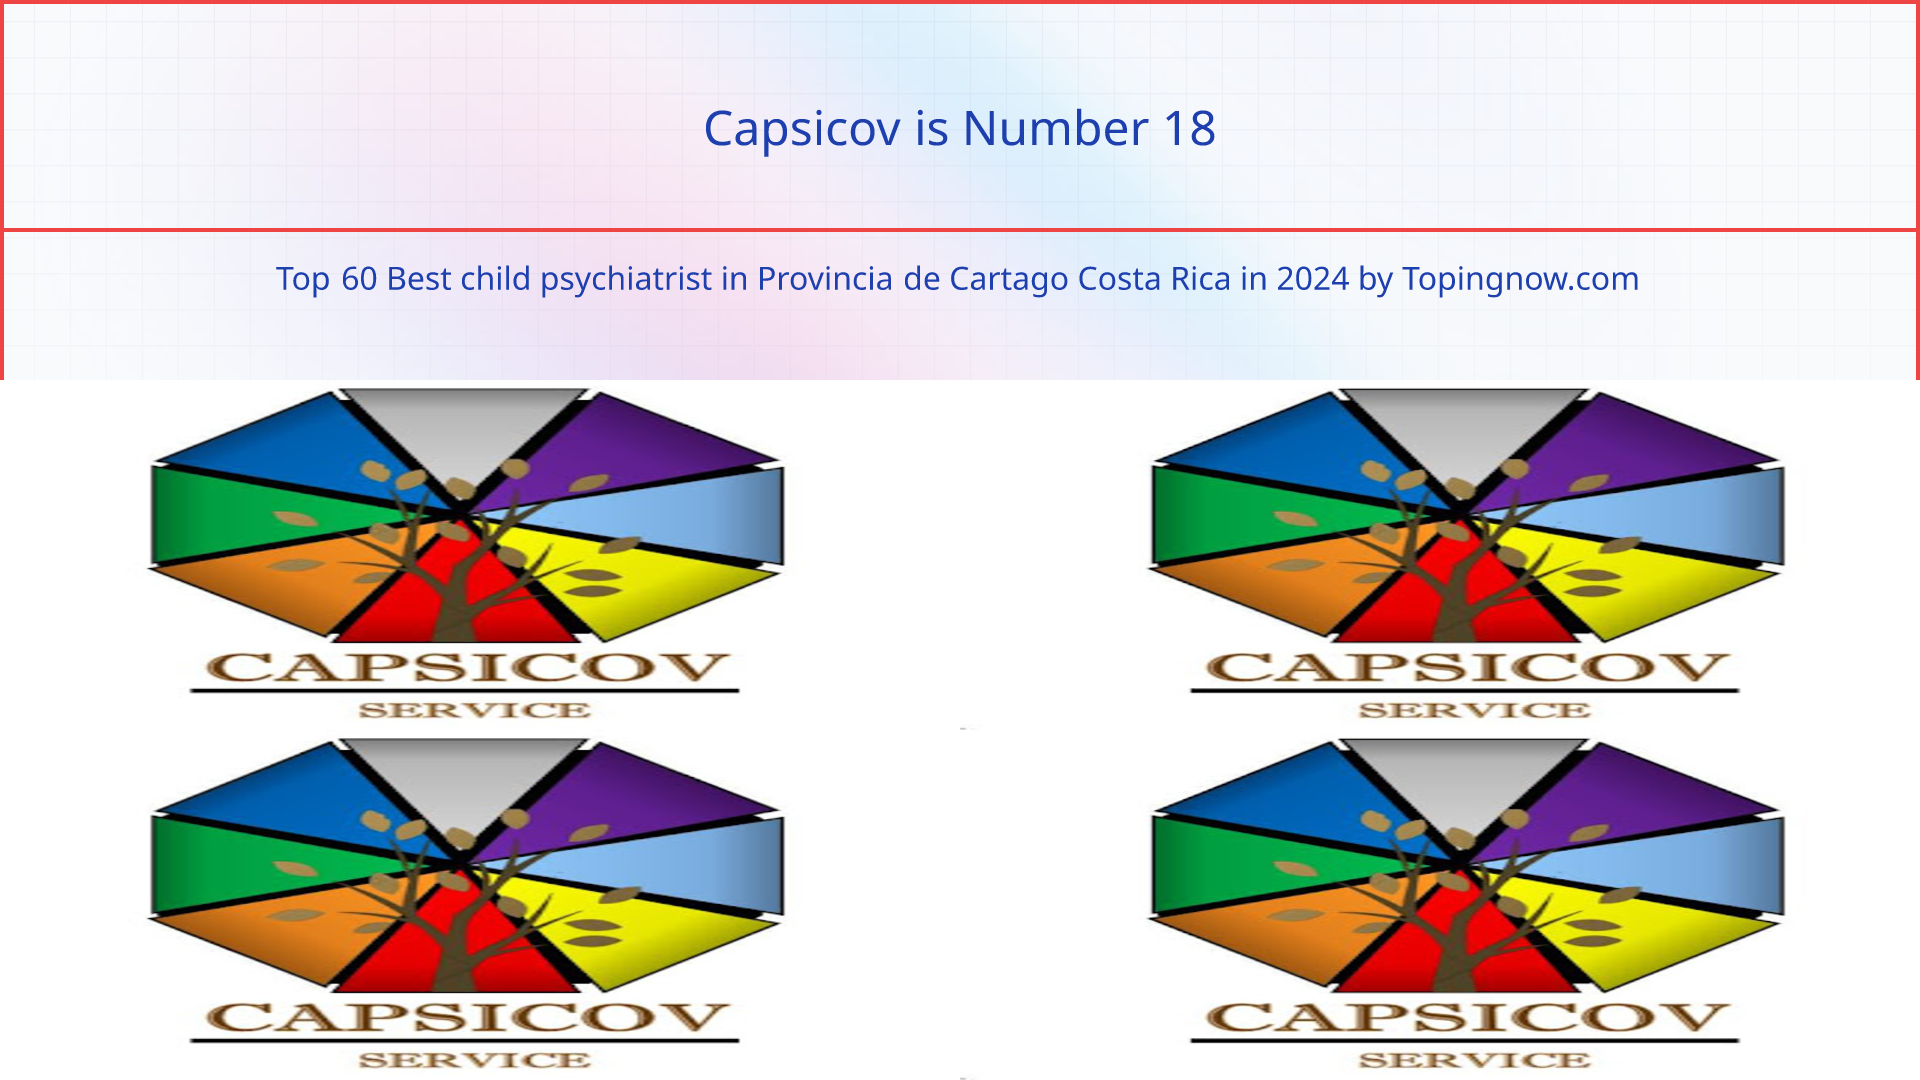 Capsicov: Top 60 Best child psychiatrist in Provincia de Cartago Costa Rica in 2024